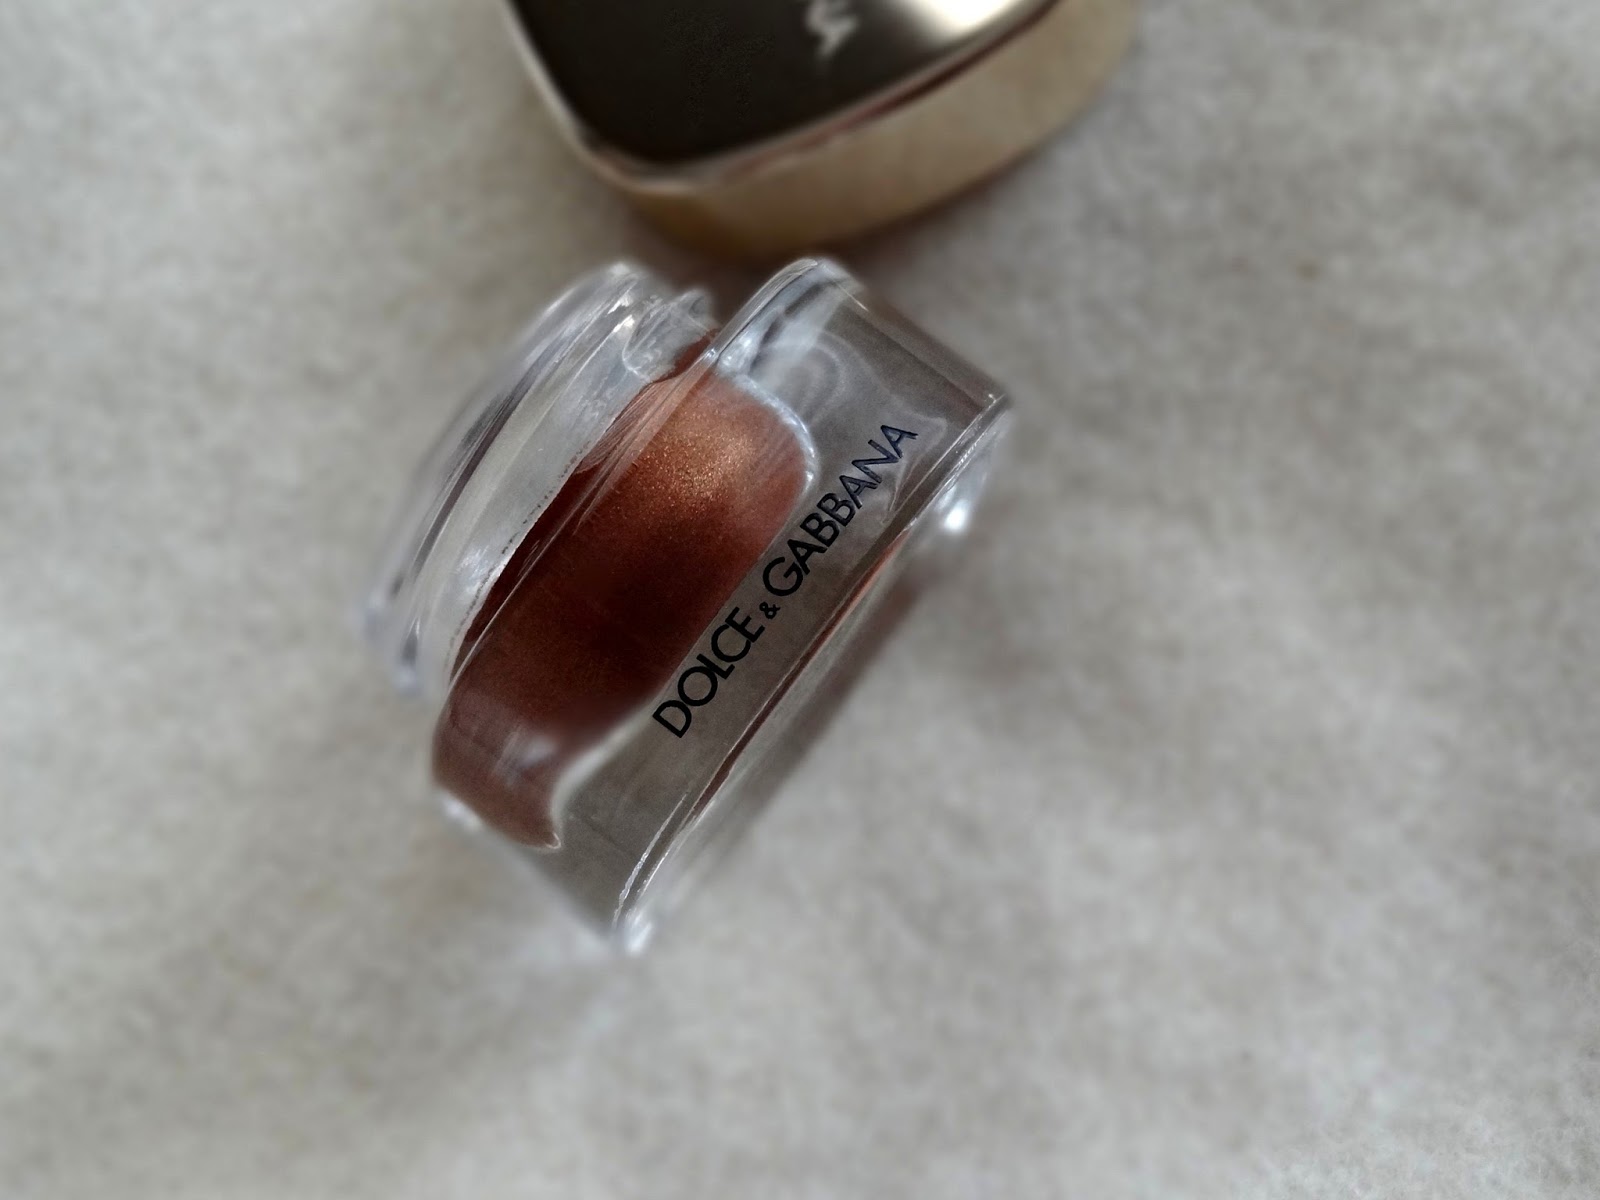 Dolce & Gabbana Perfect Mono Cream Eye Colour in Bronze Review, Photos & Swatches